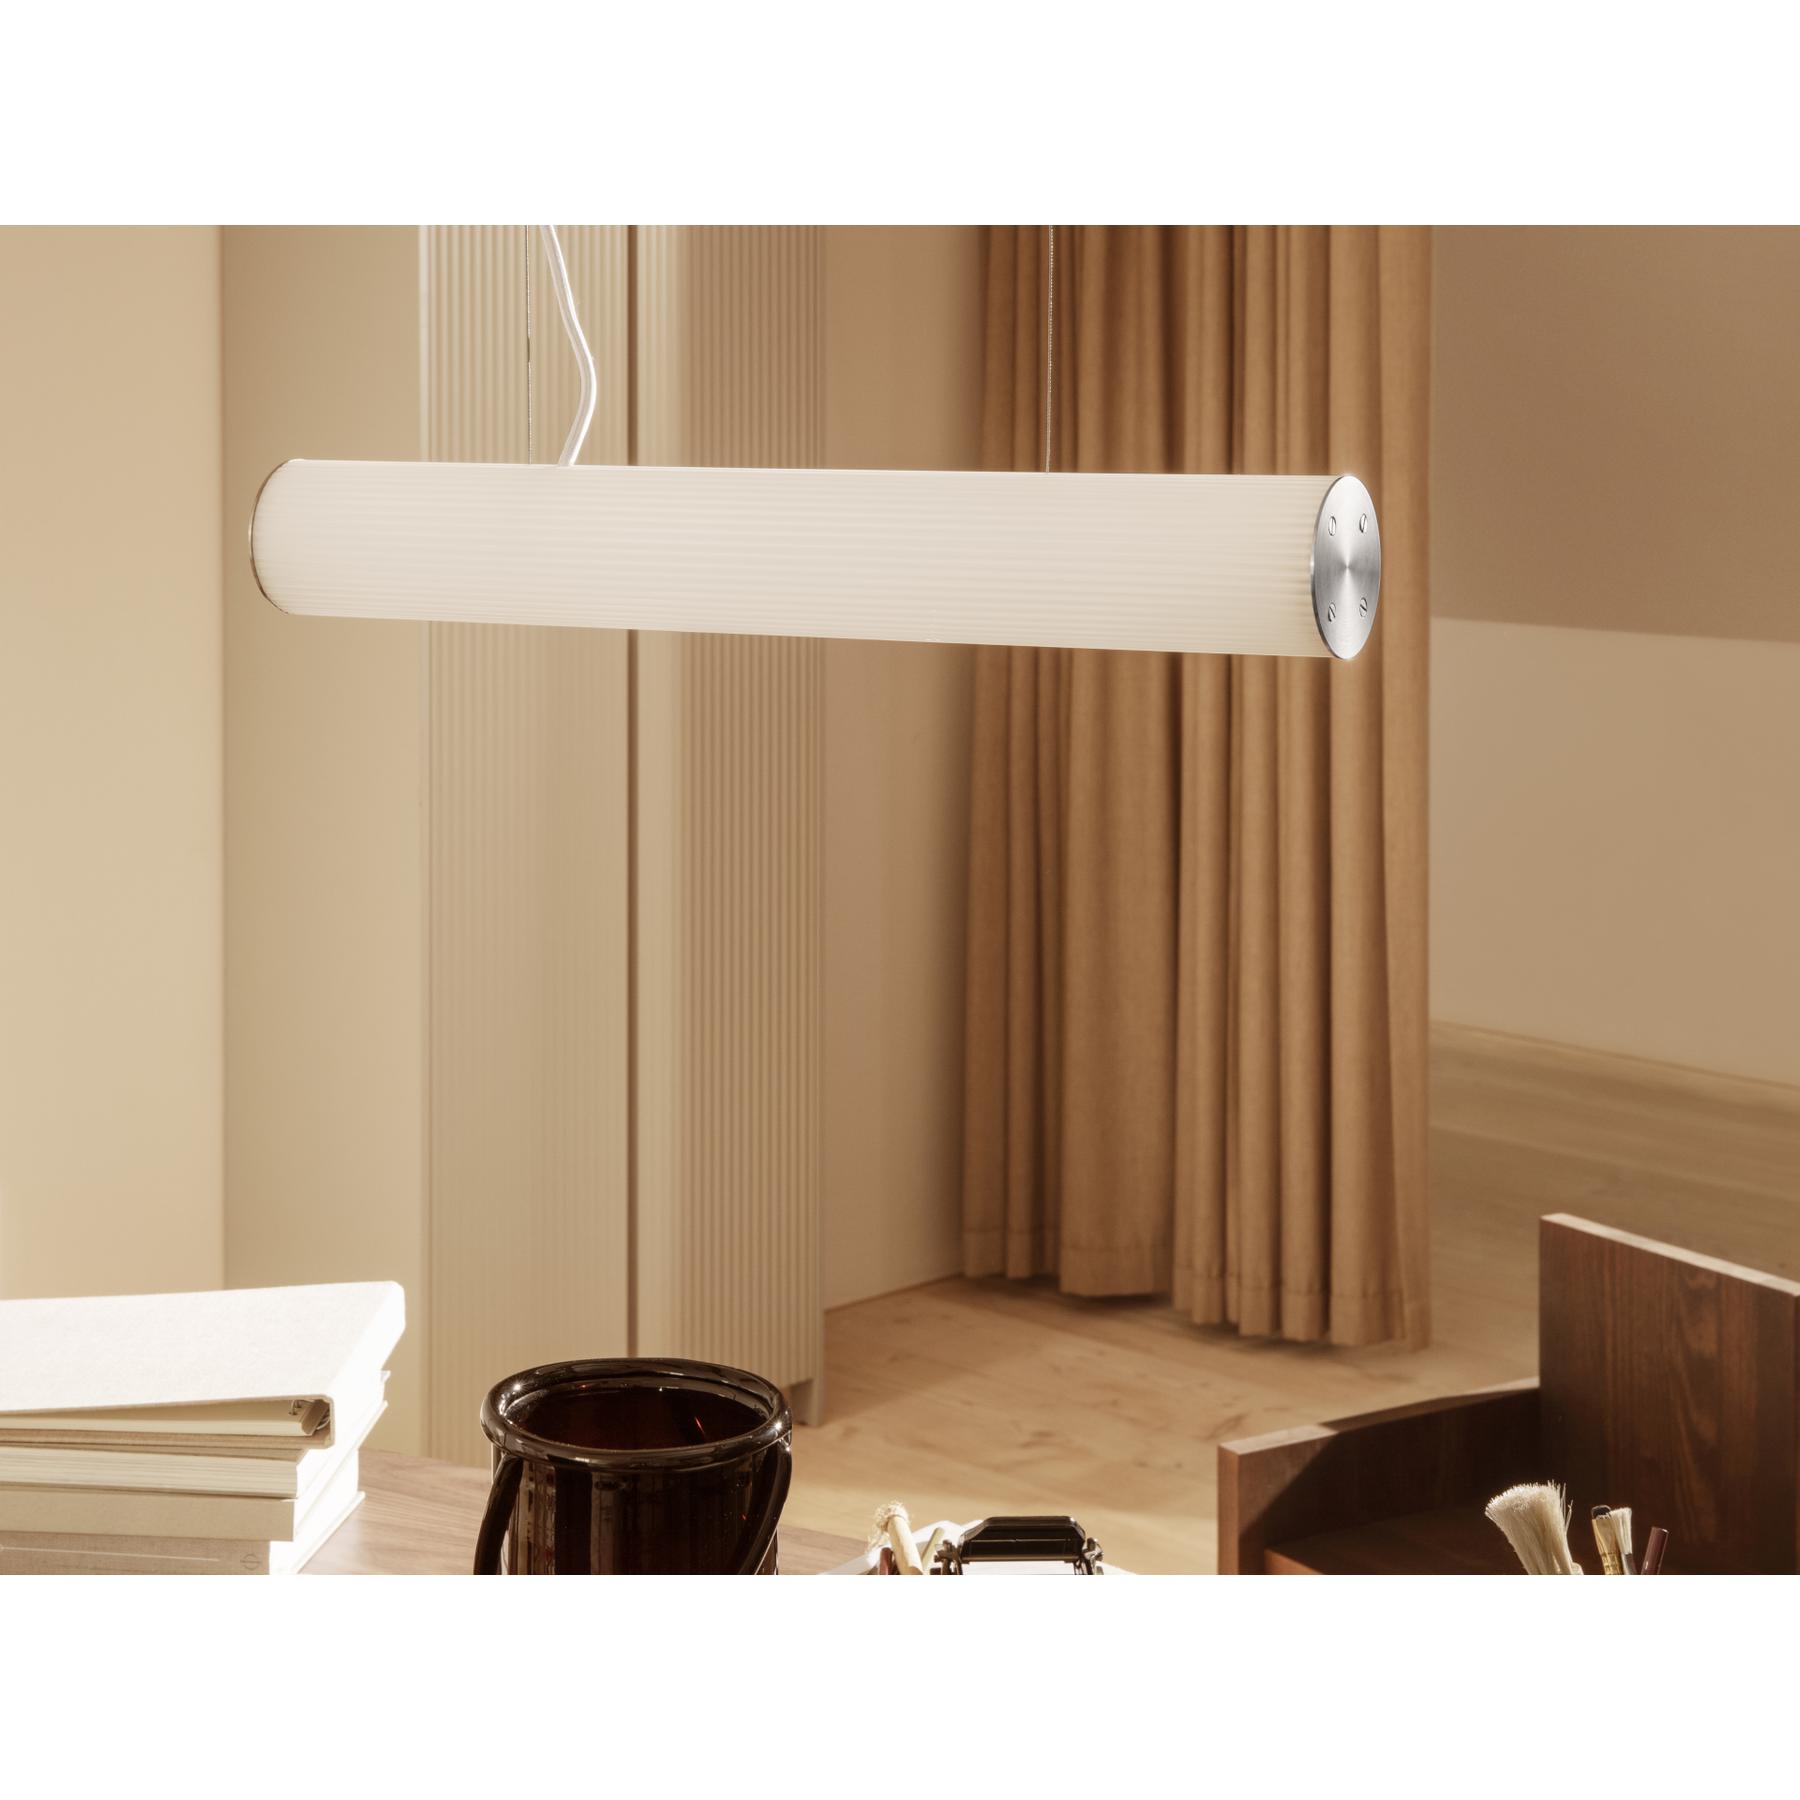 Ferm Living Vuelta Suspension Lampe en acier inoxydable Ø60 cm, blanc